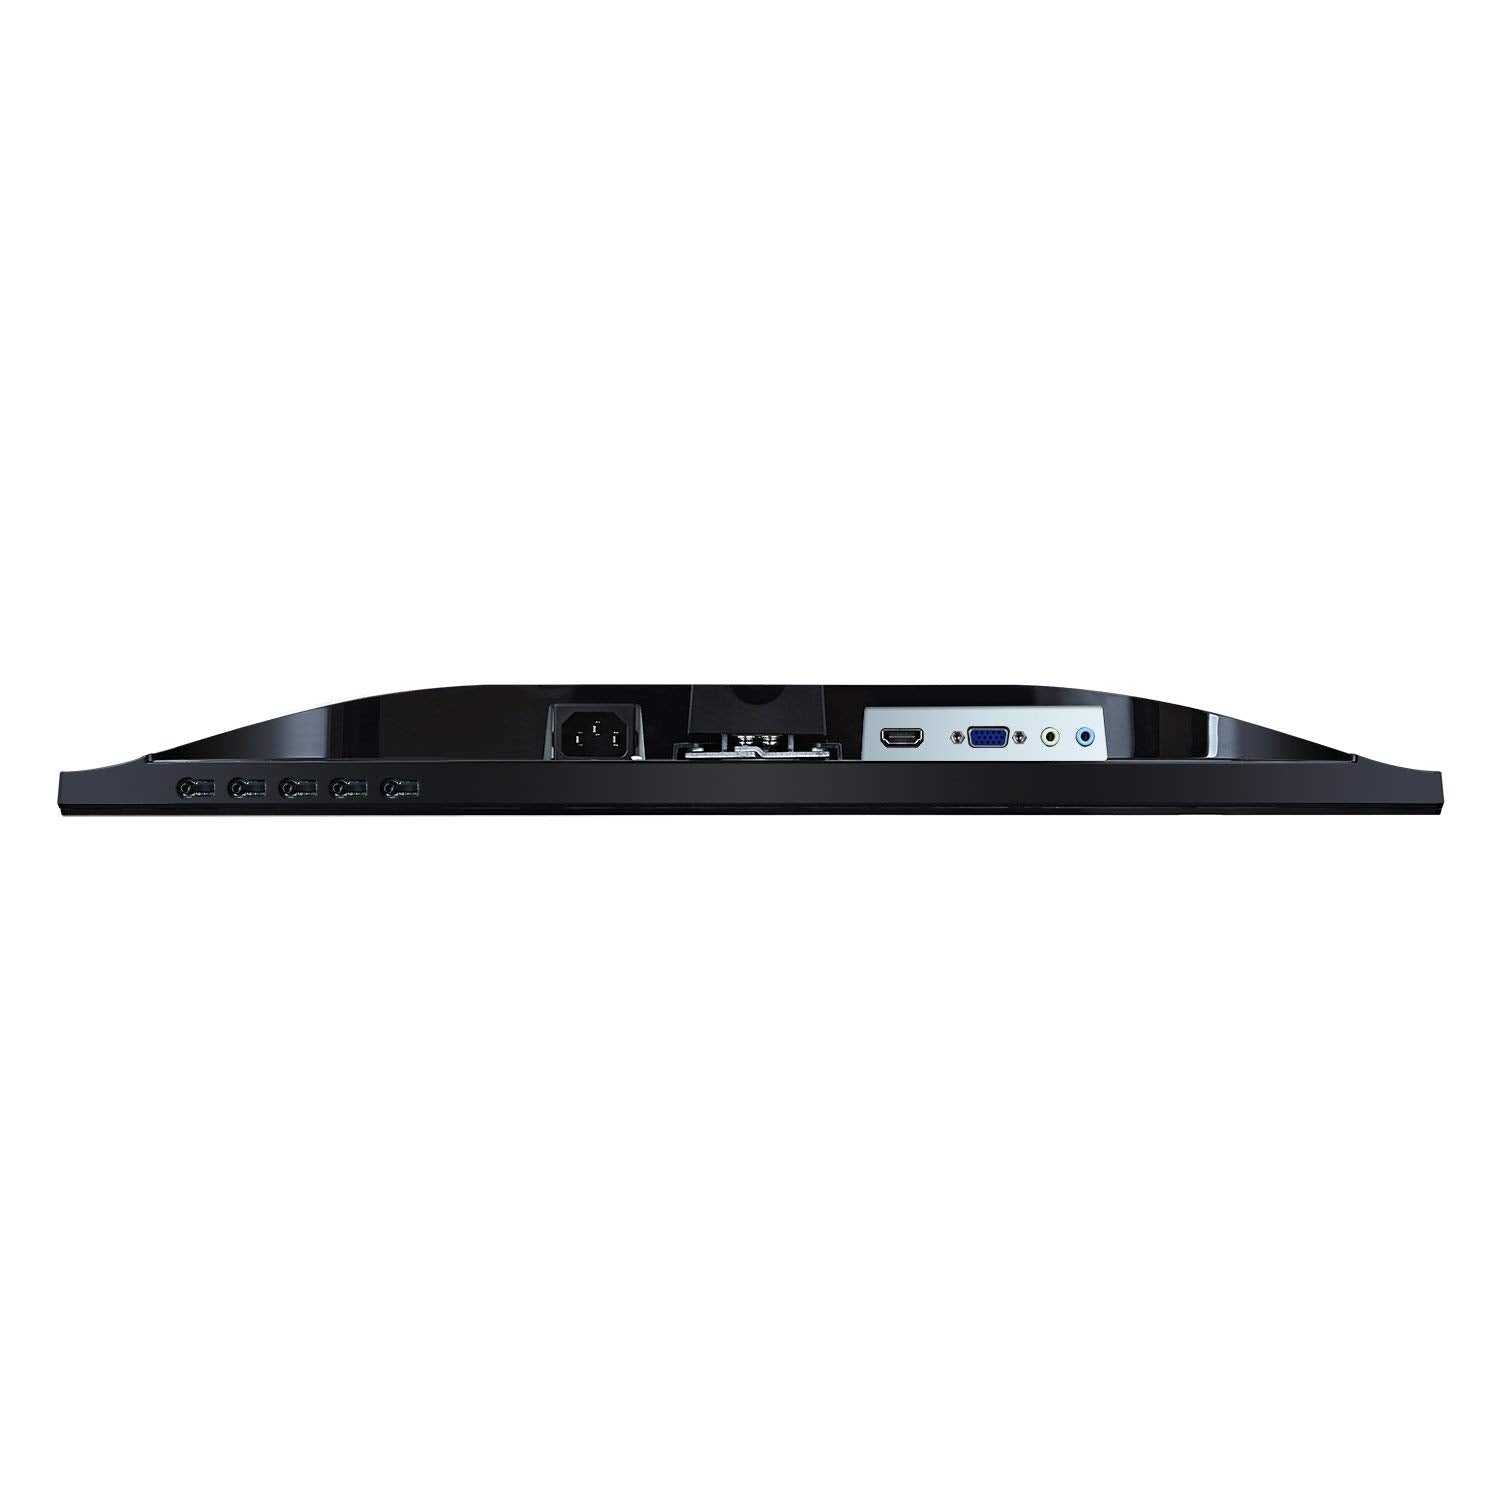 ViewSonic VA2459-SMH-2-R 24" IPS 1080p Frameless LED Monitor - Certified Refurbished